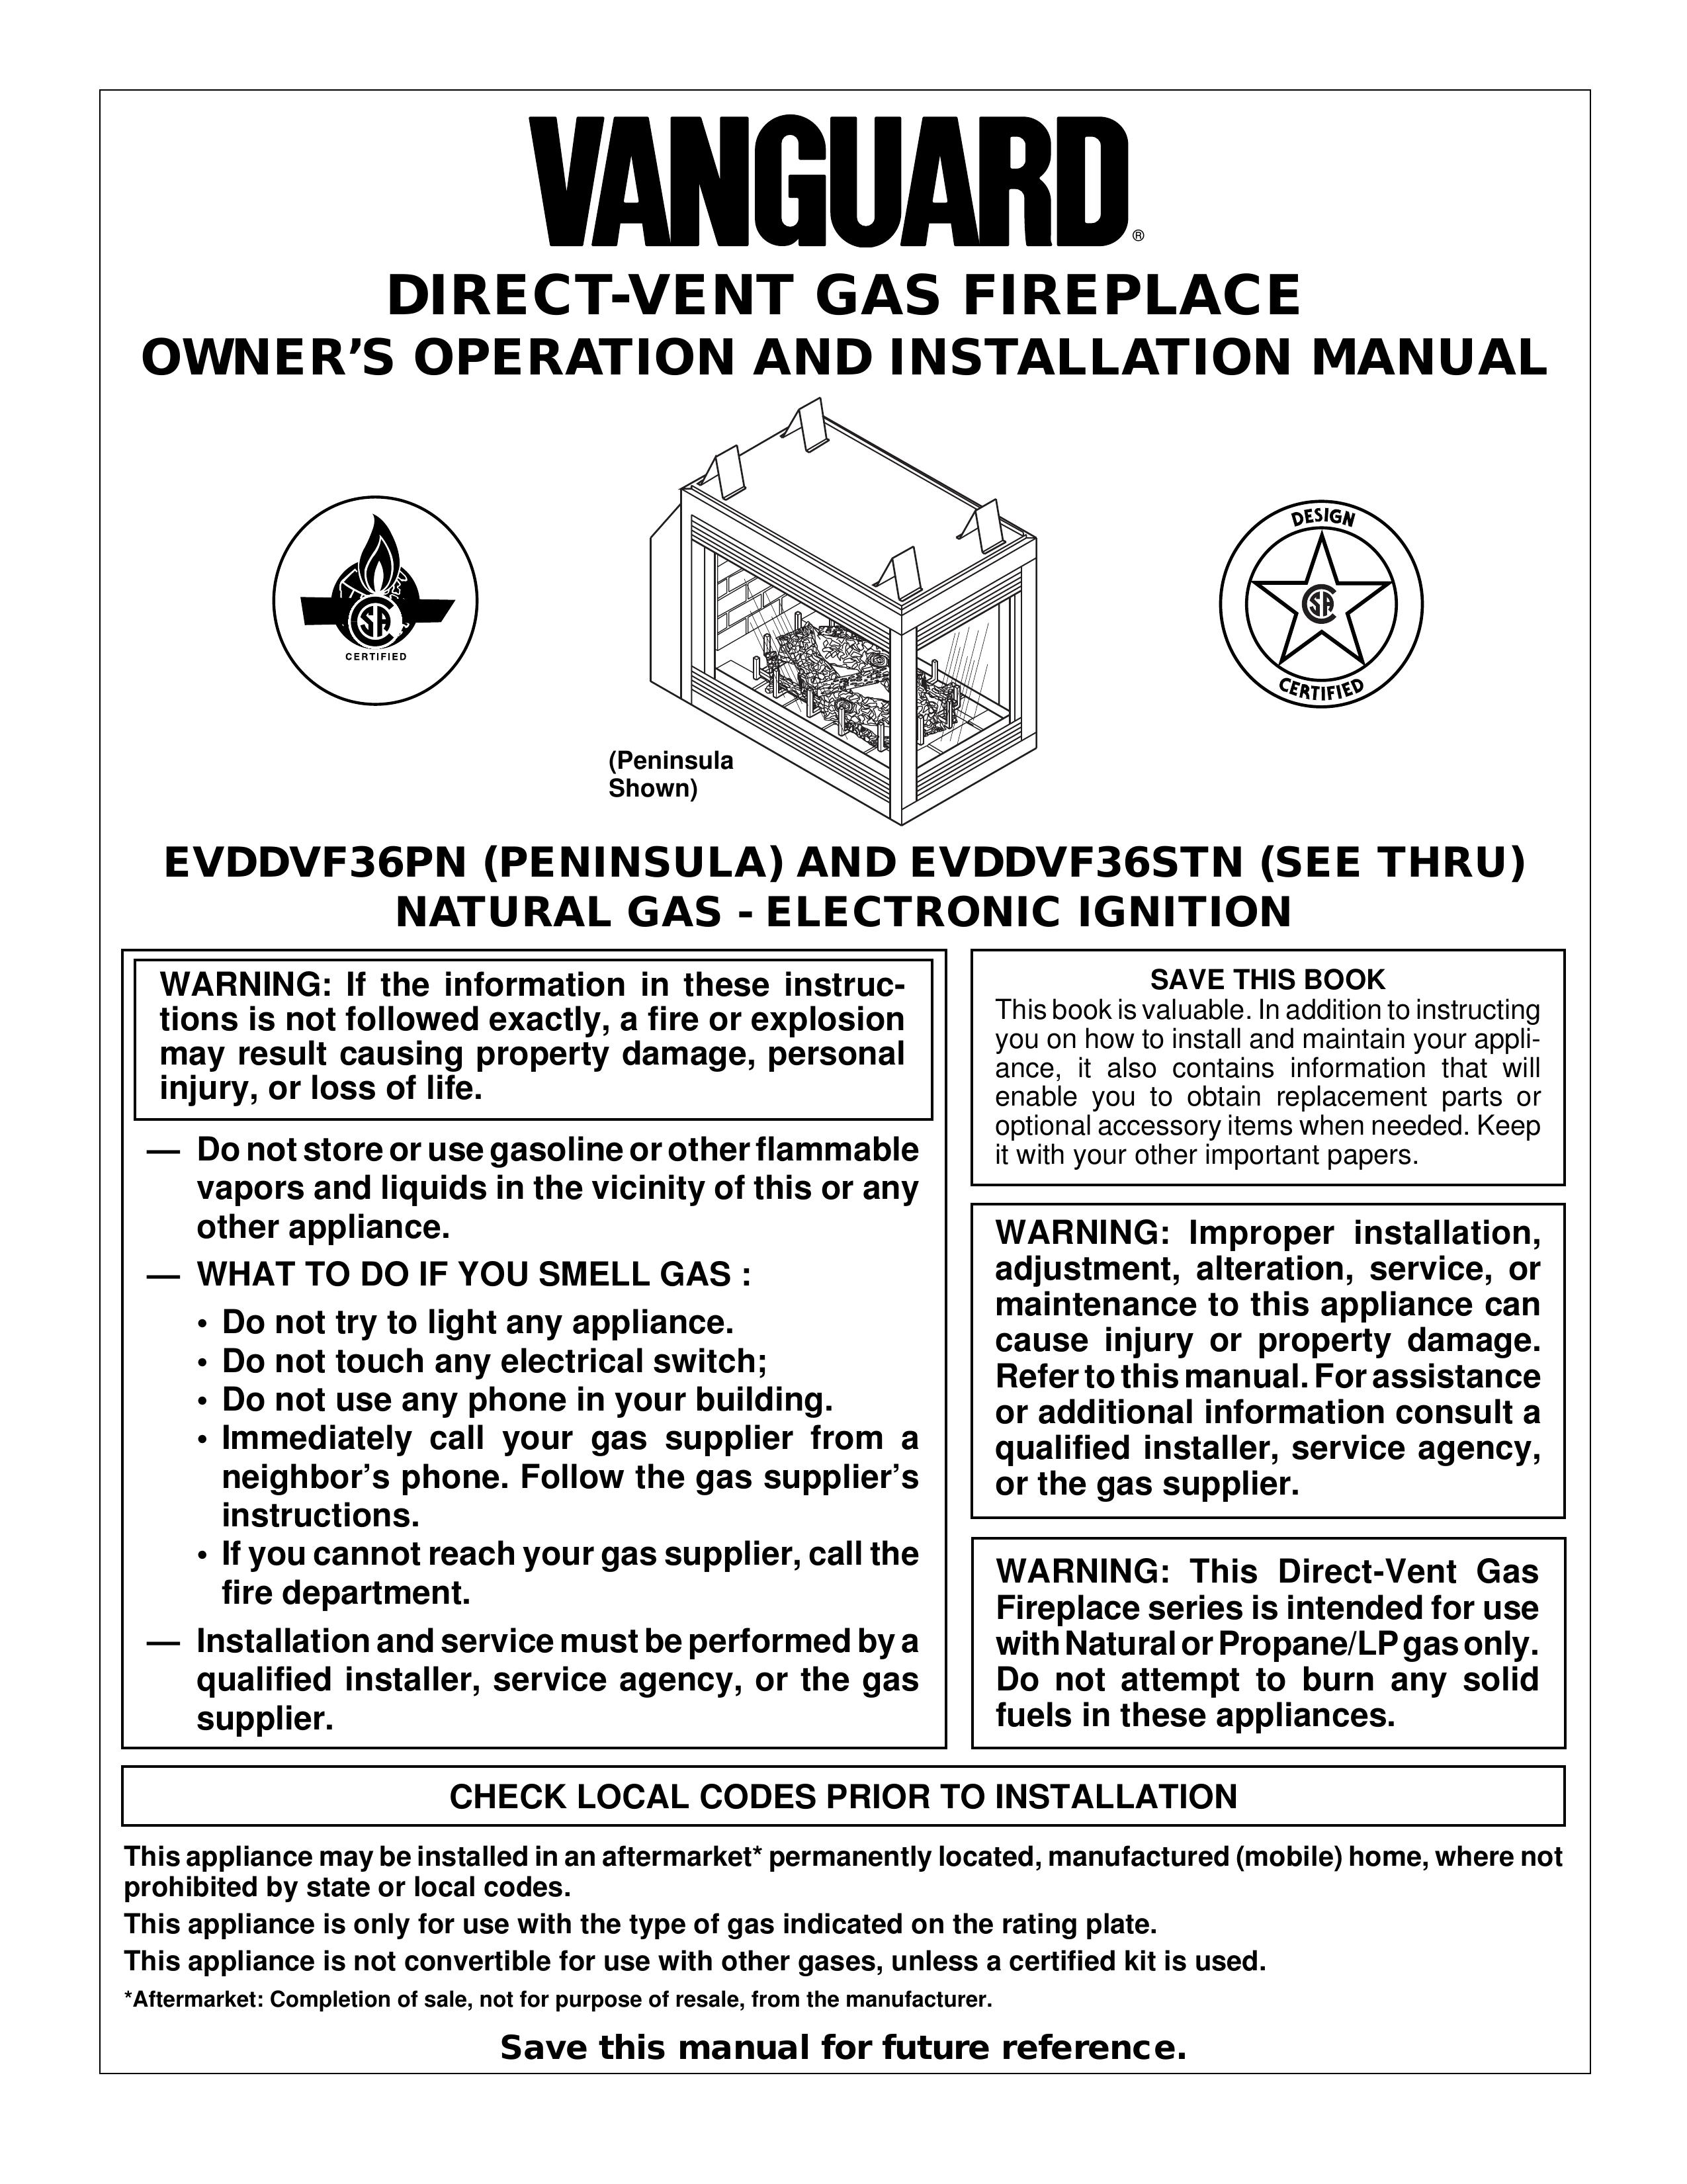 Desa EVDDVF36PN Fire Pit User Manual